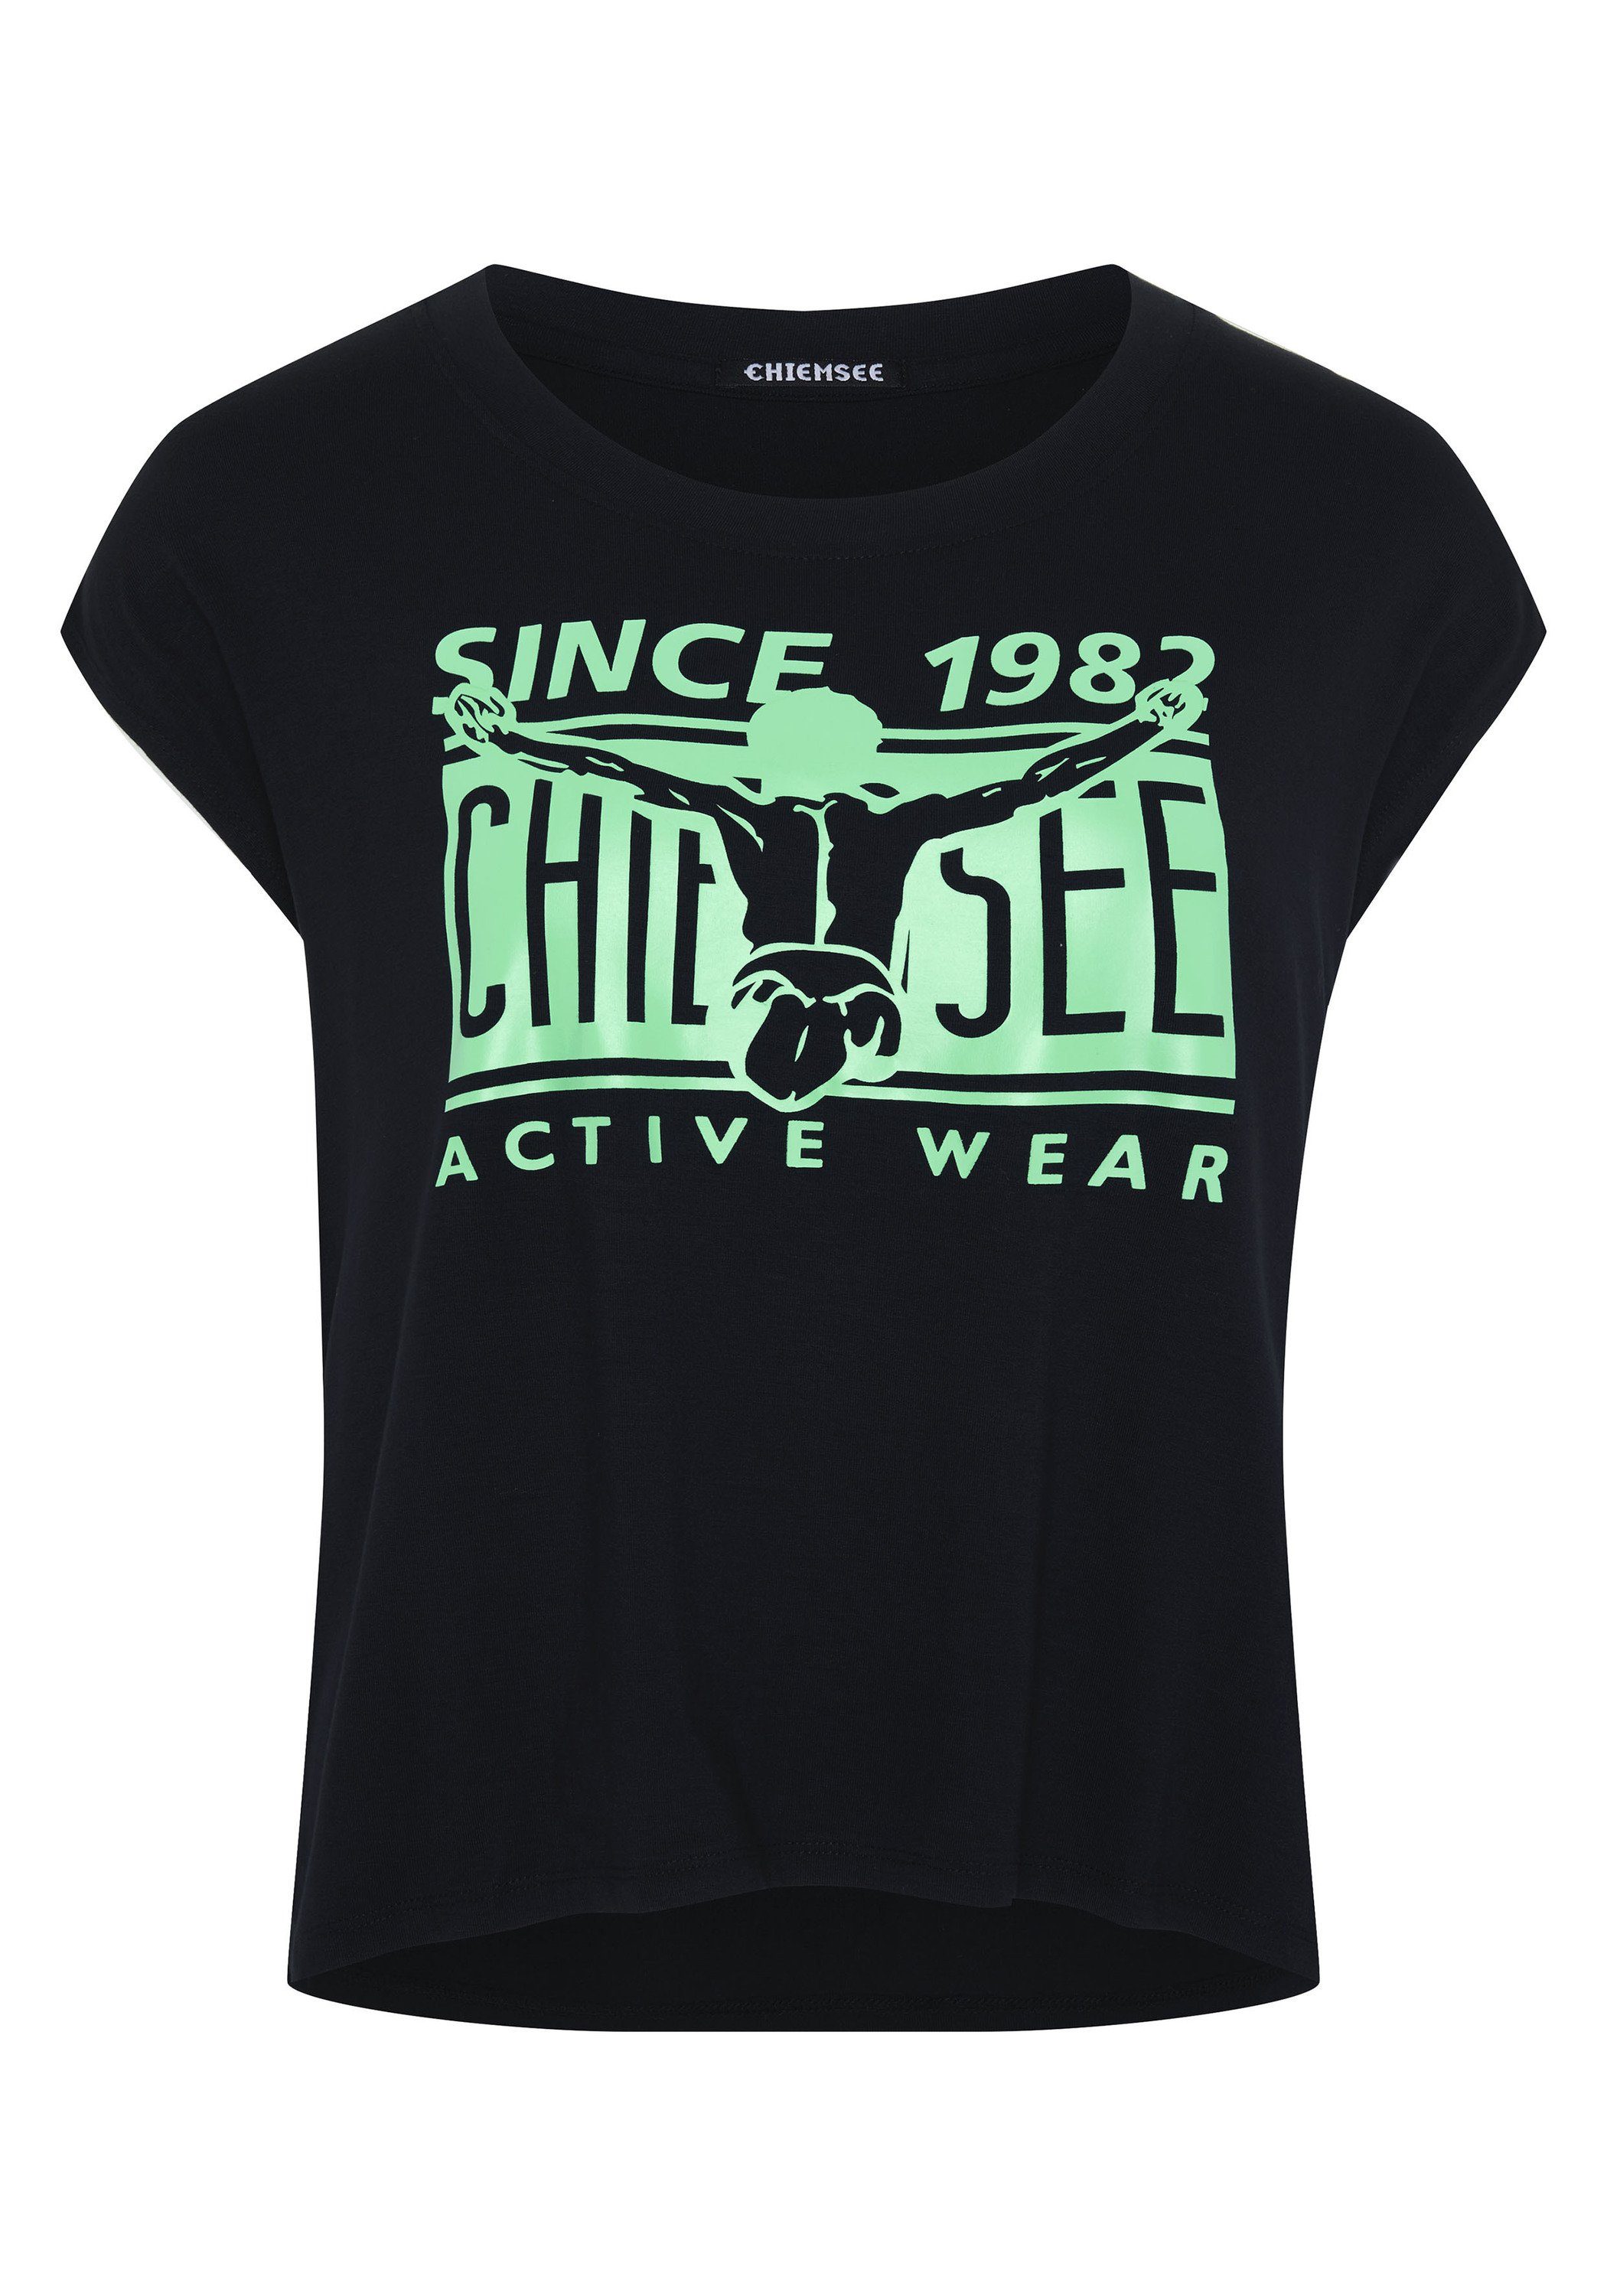 Chiemsee Print-Shirt T-Shirt aus Viskose-Elasthanmix mit Labelprint 1 Deep Black